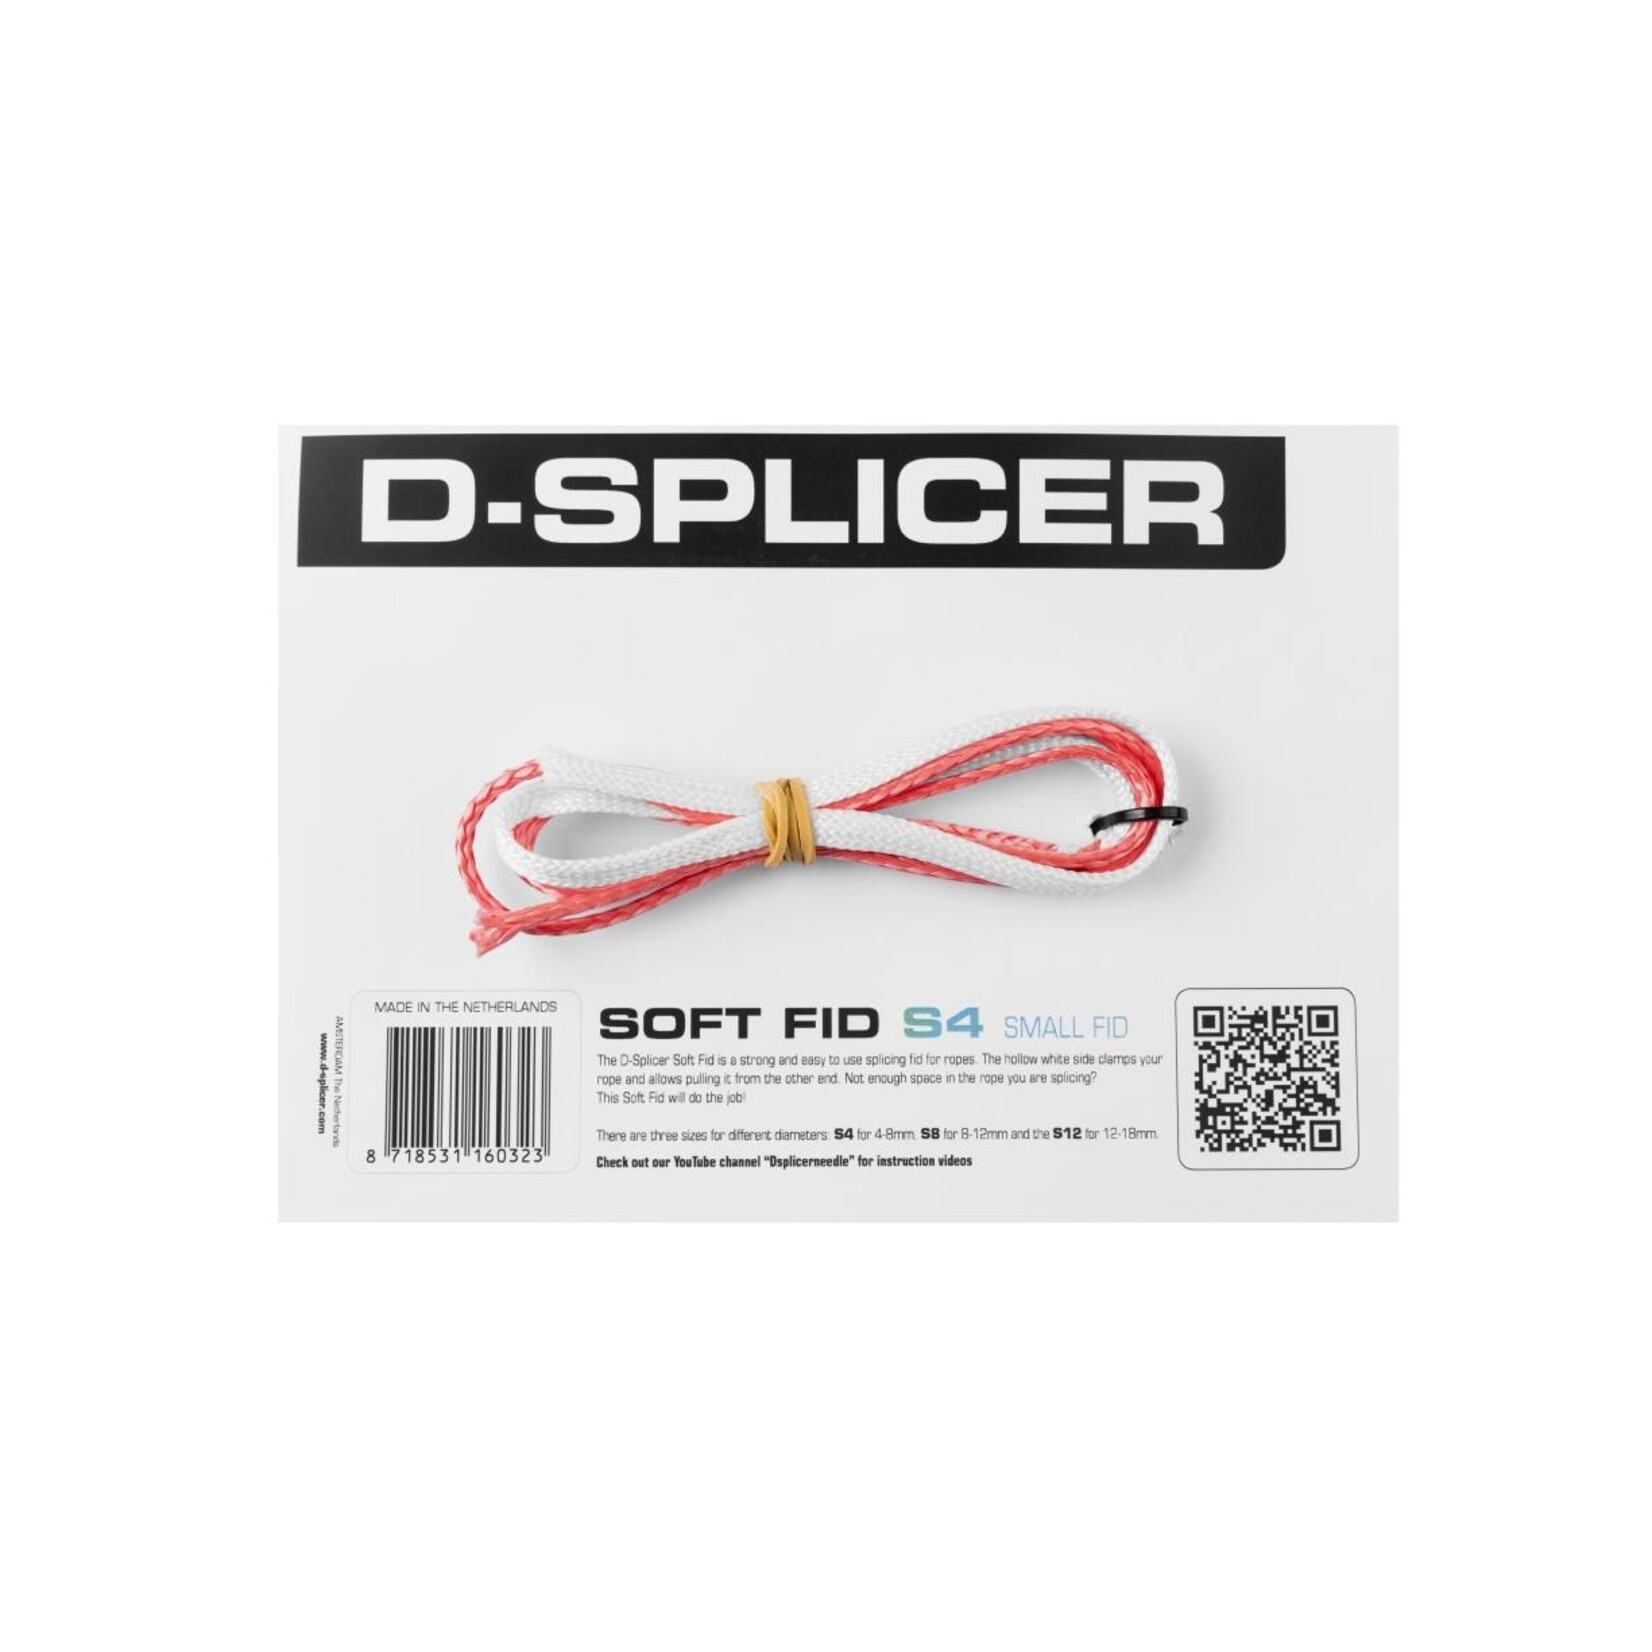 D-Splicer D-Splicer Soft Fid S-4 small